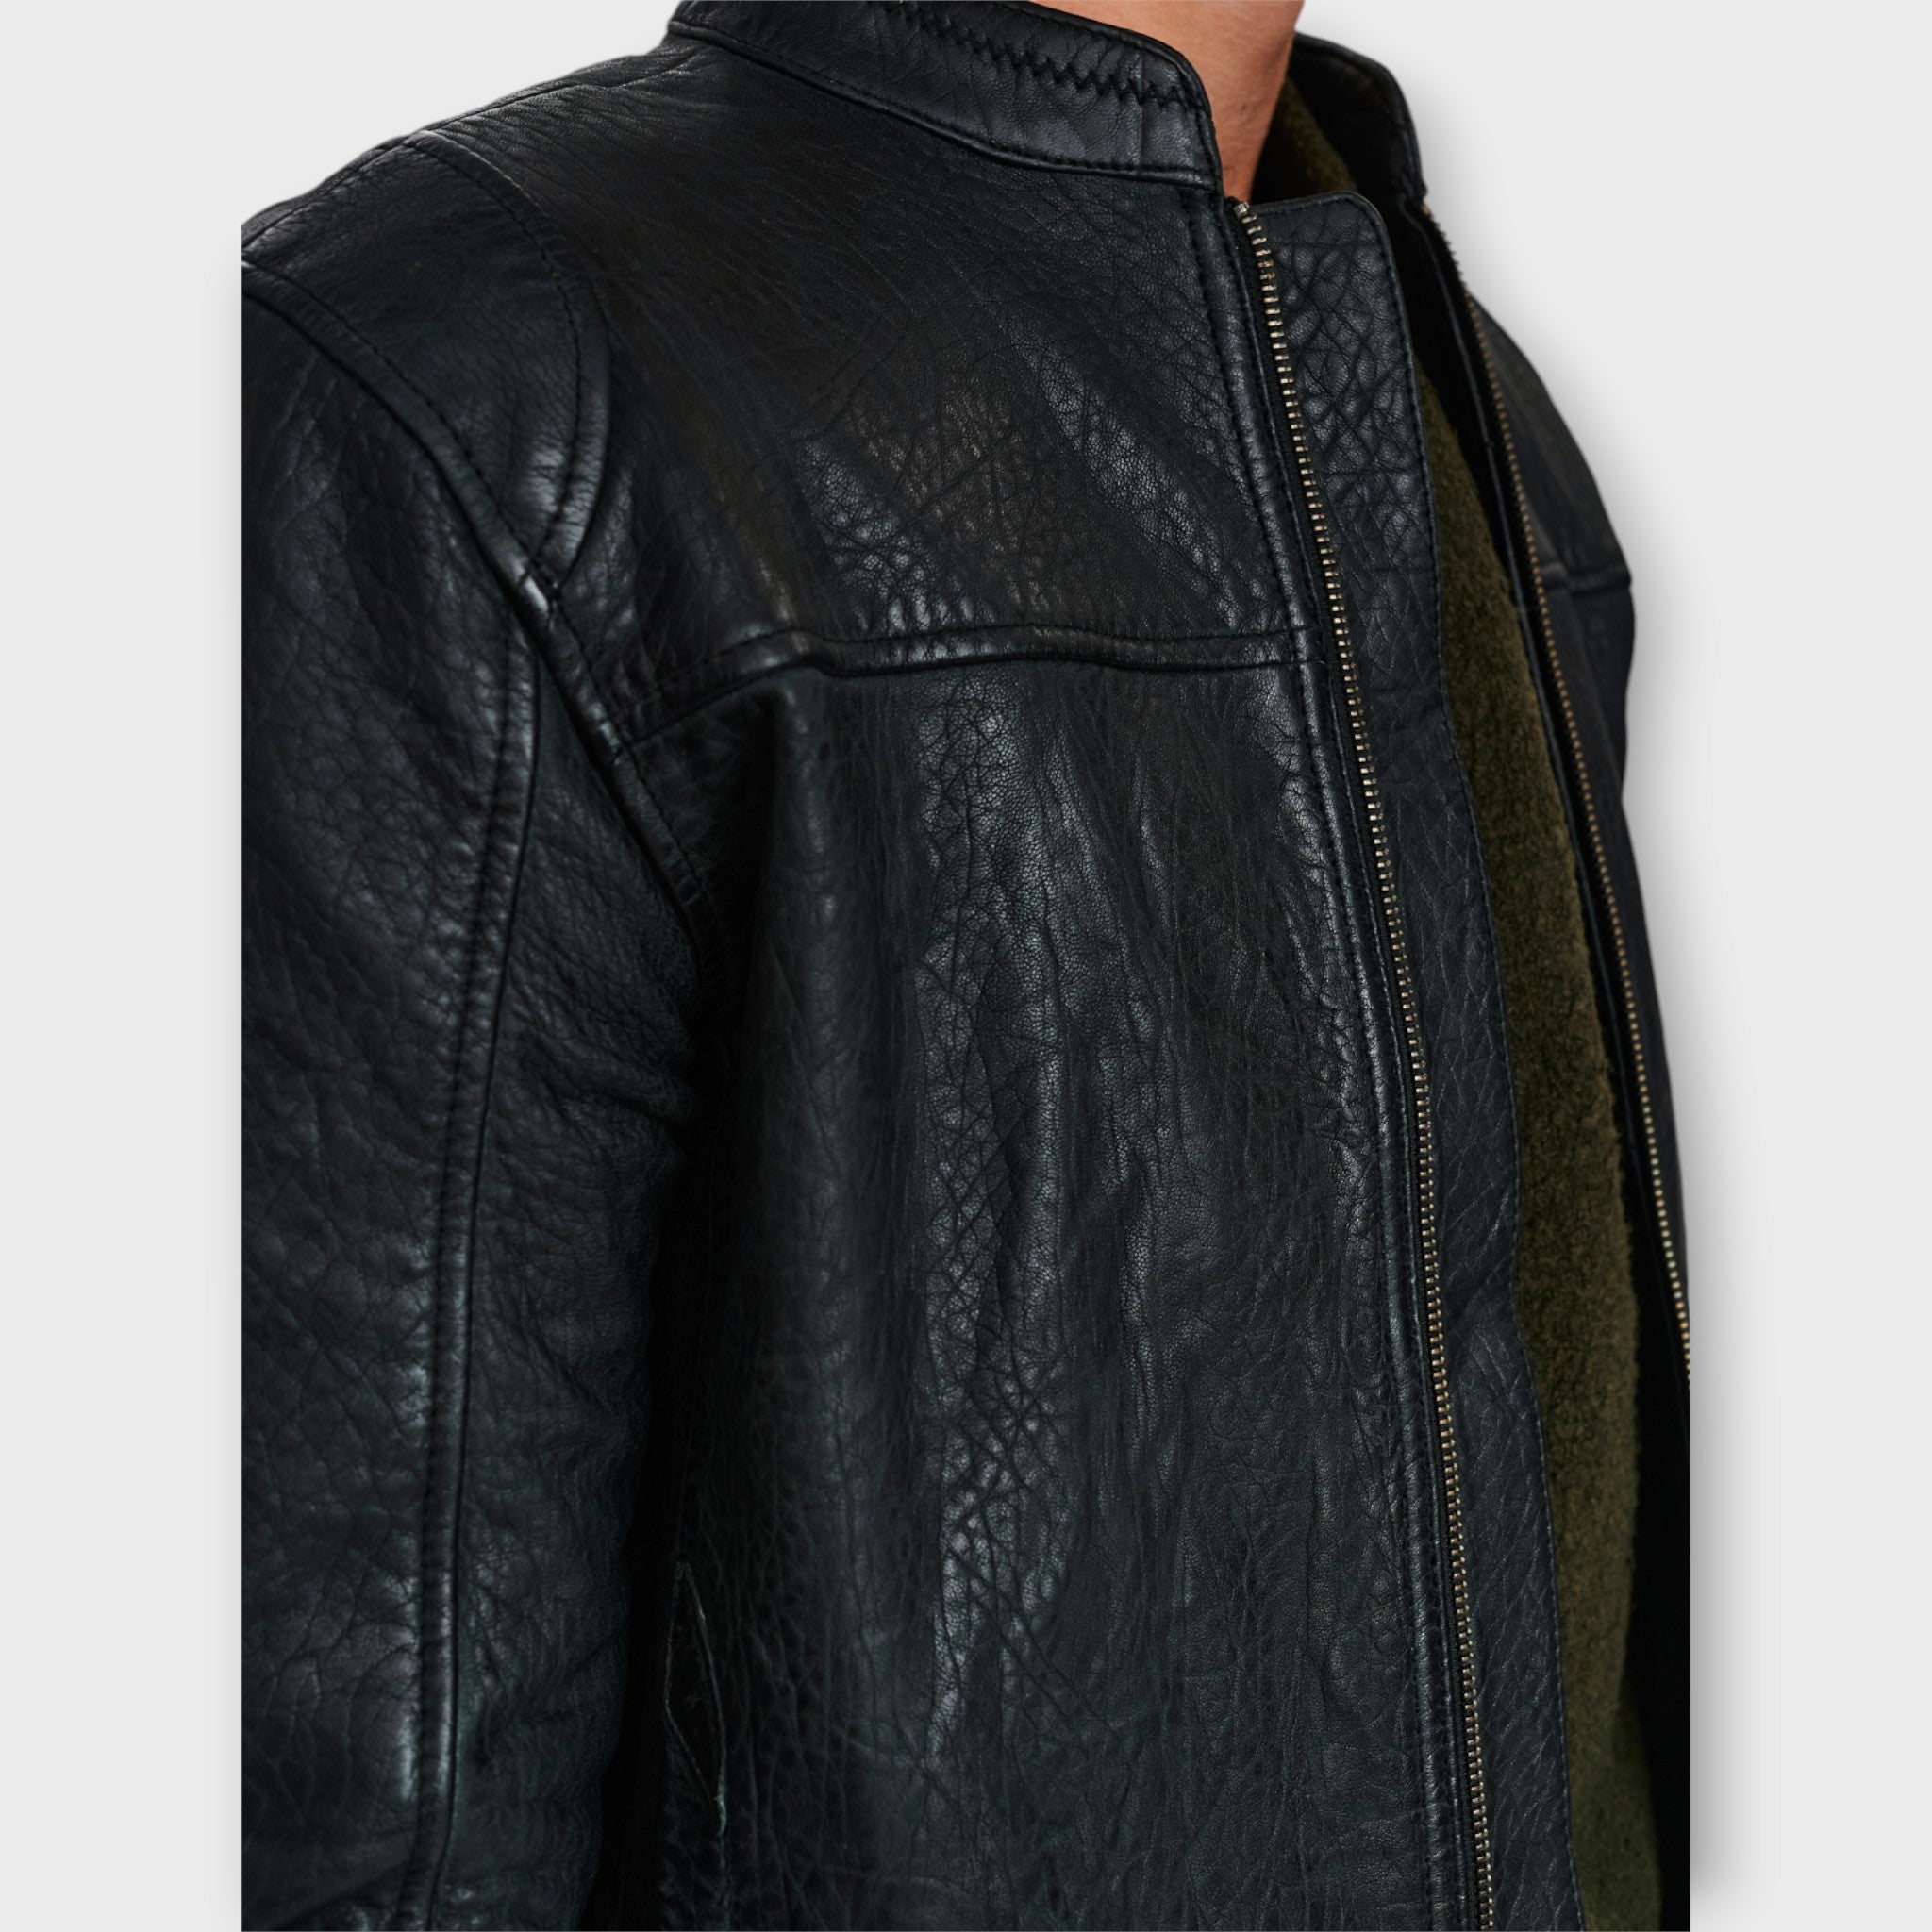 Benton Black Leather Jacket - Black - The Sons online